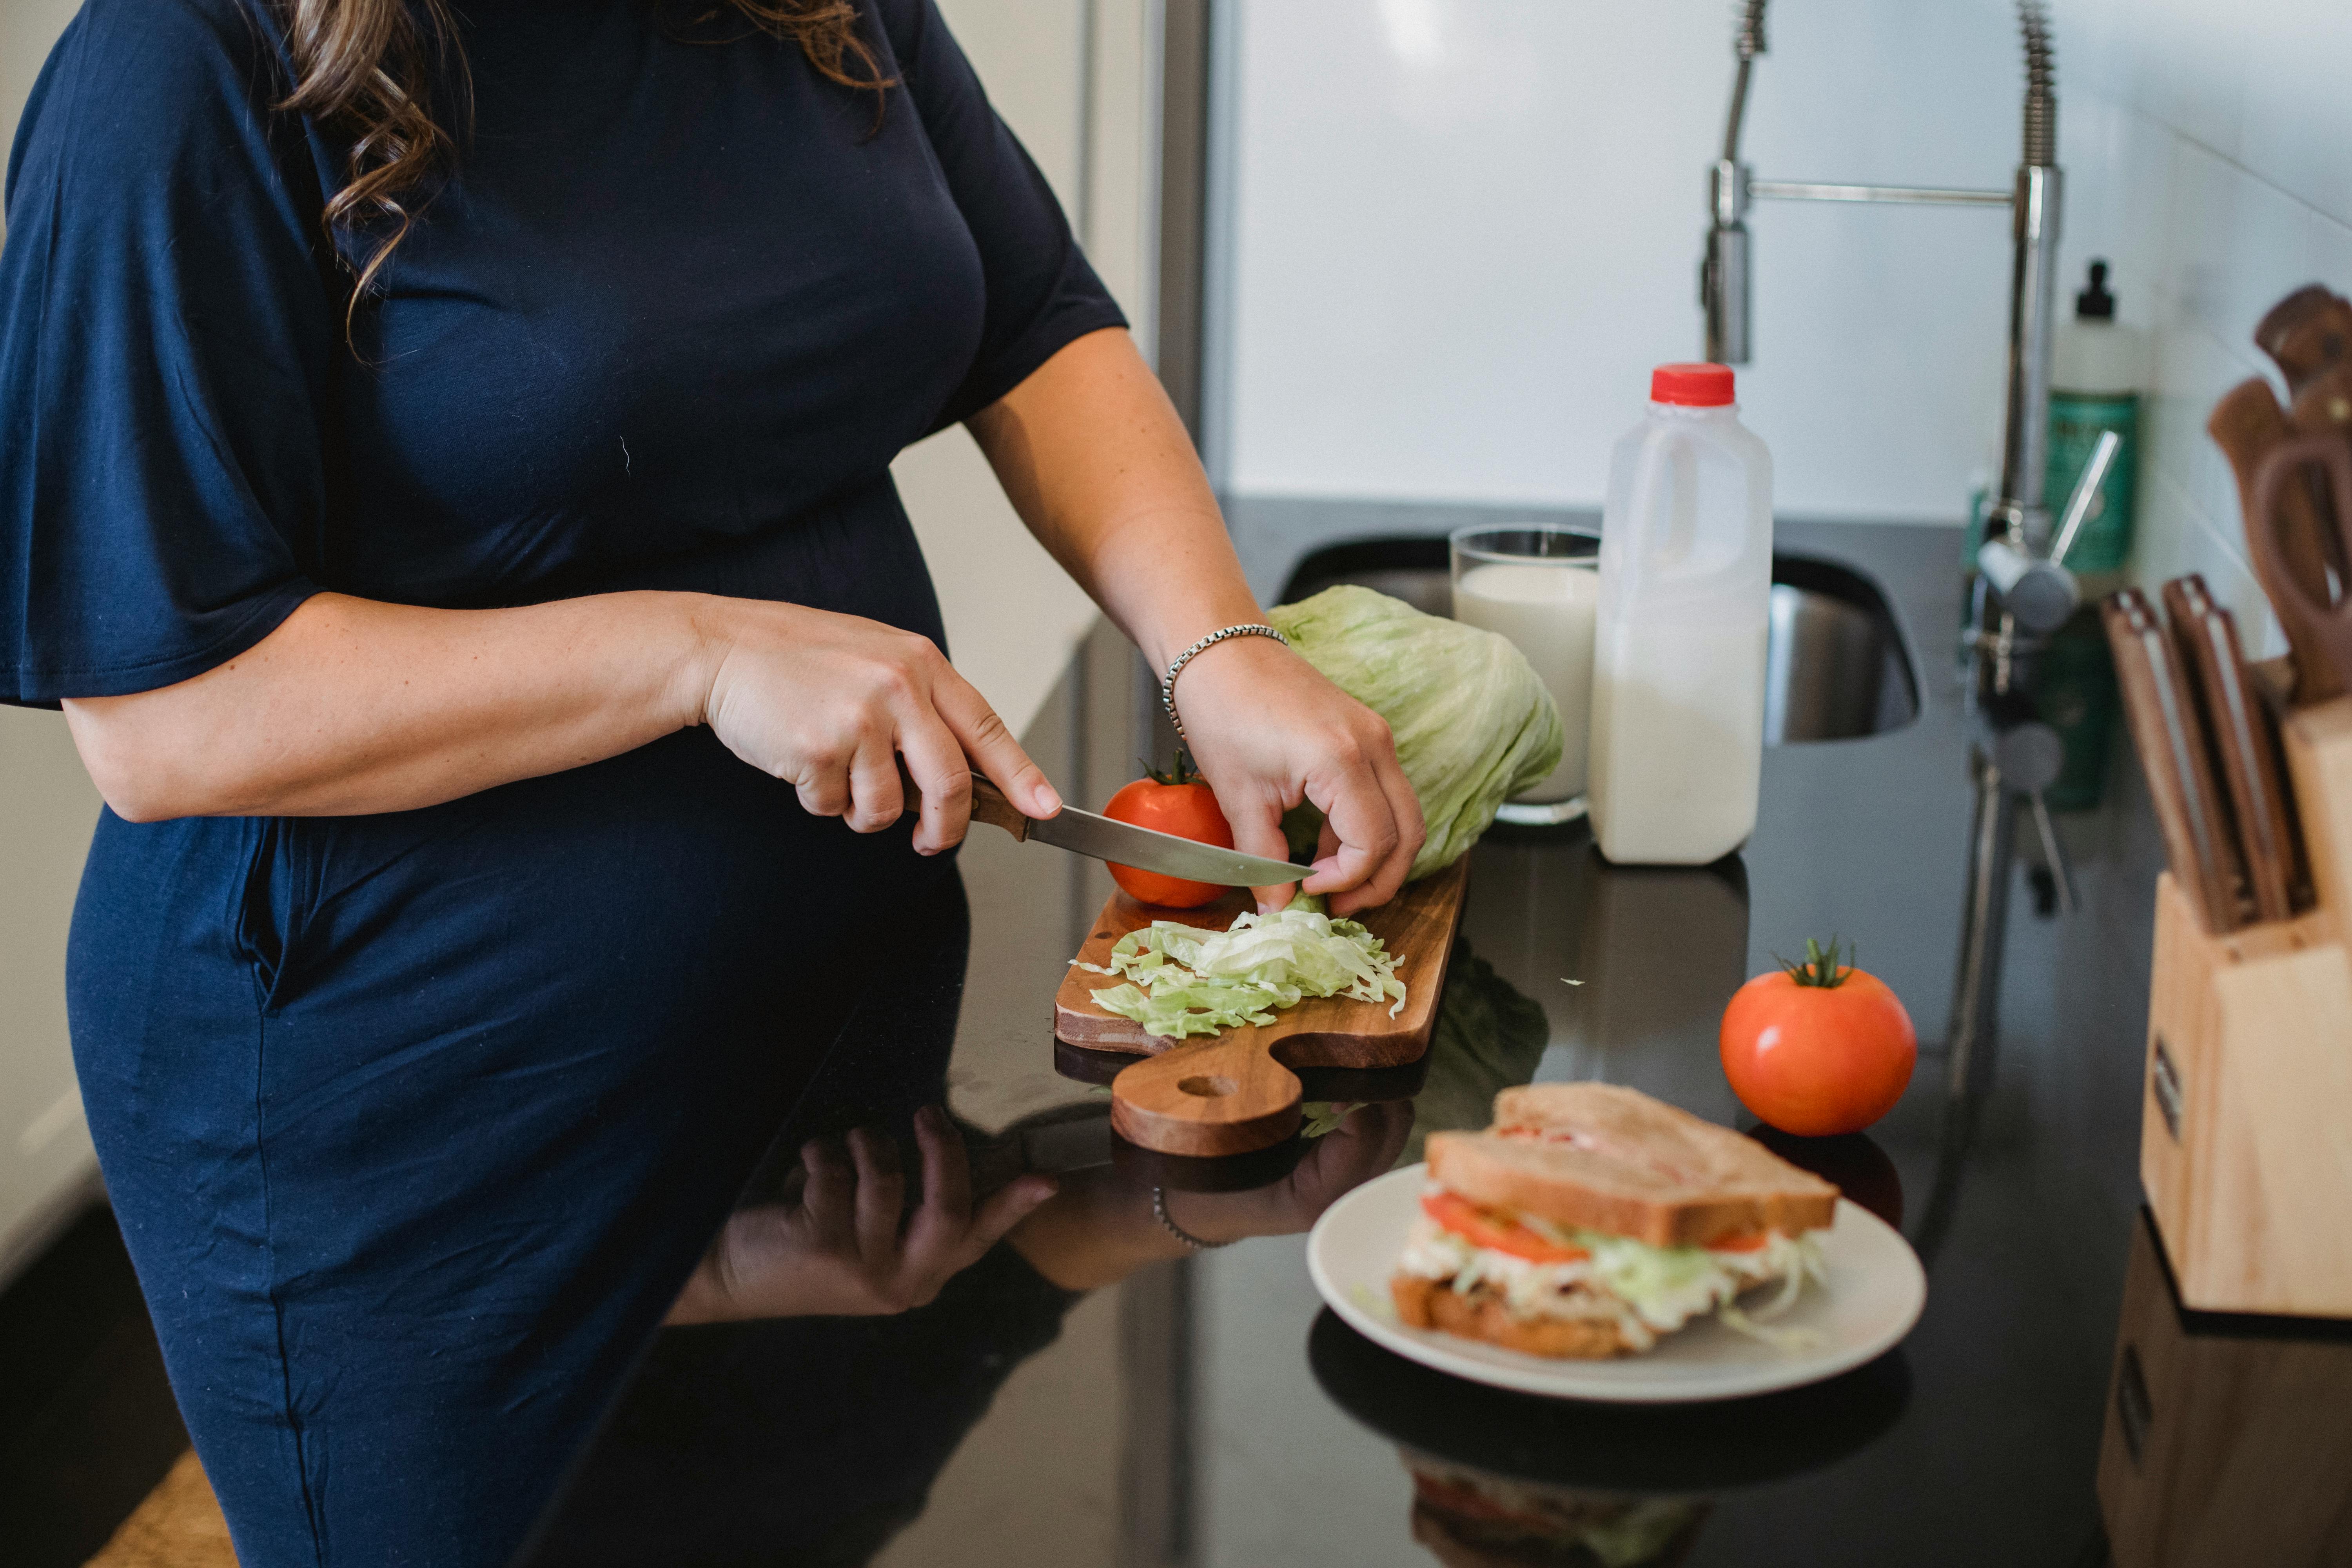 A pregnant woman cooking | Source: Pexels